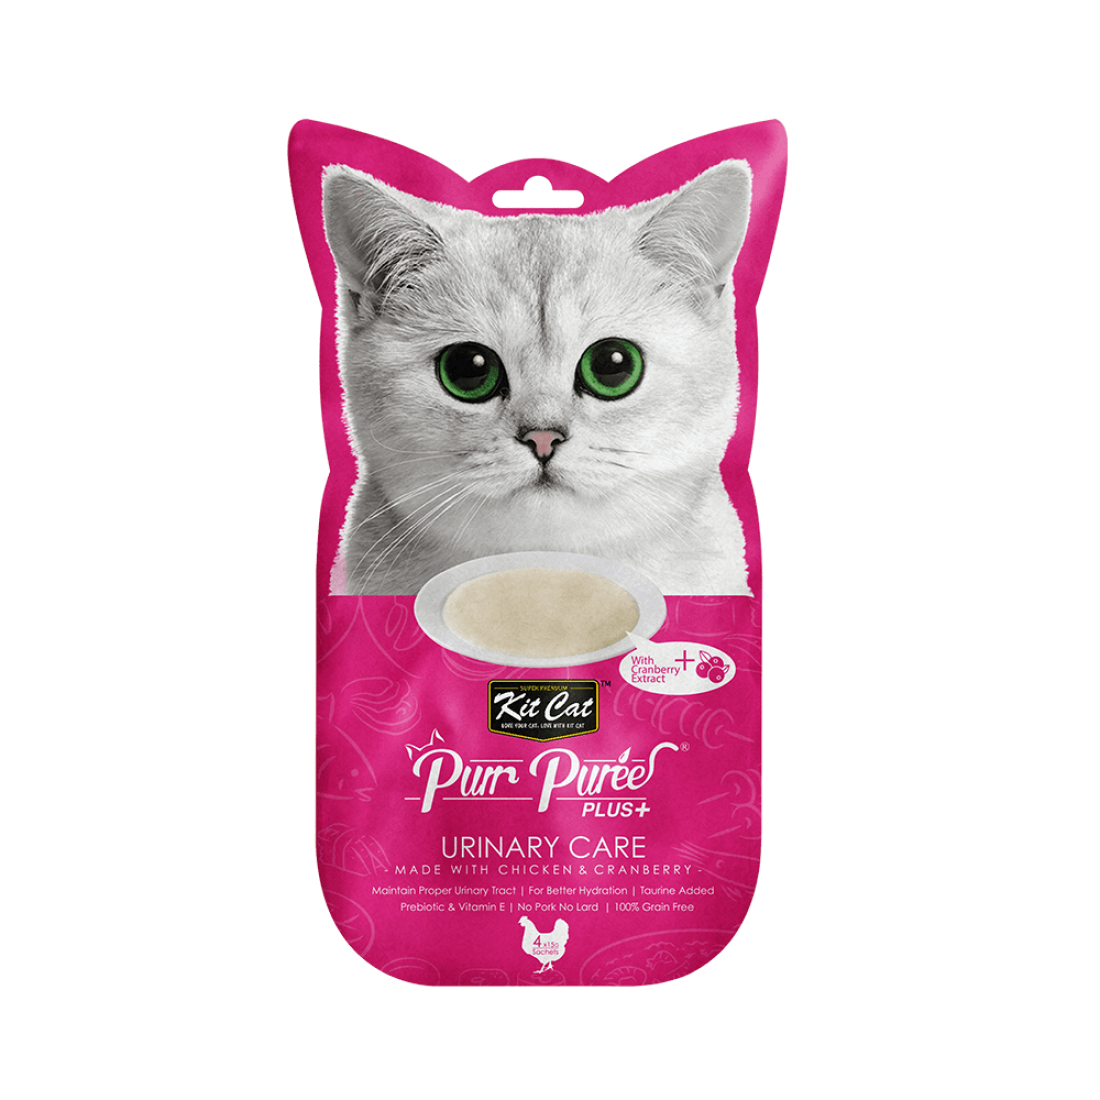 Recompense lichde pentru pisici Kit Cat Purr Puree Plus+ Urinary Care, pui si merisoare, 4x15g